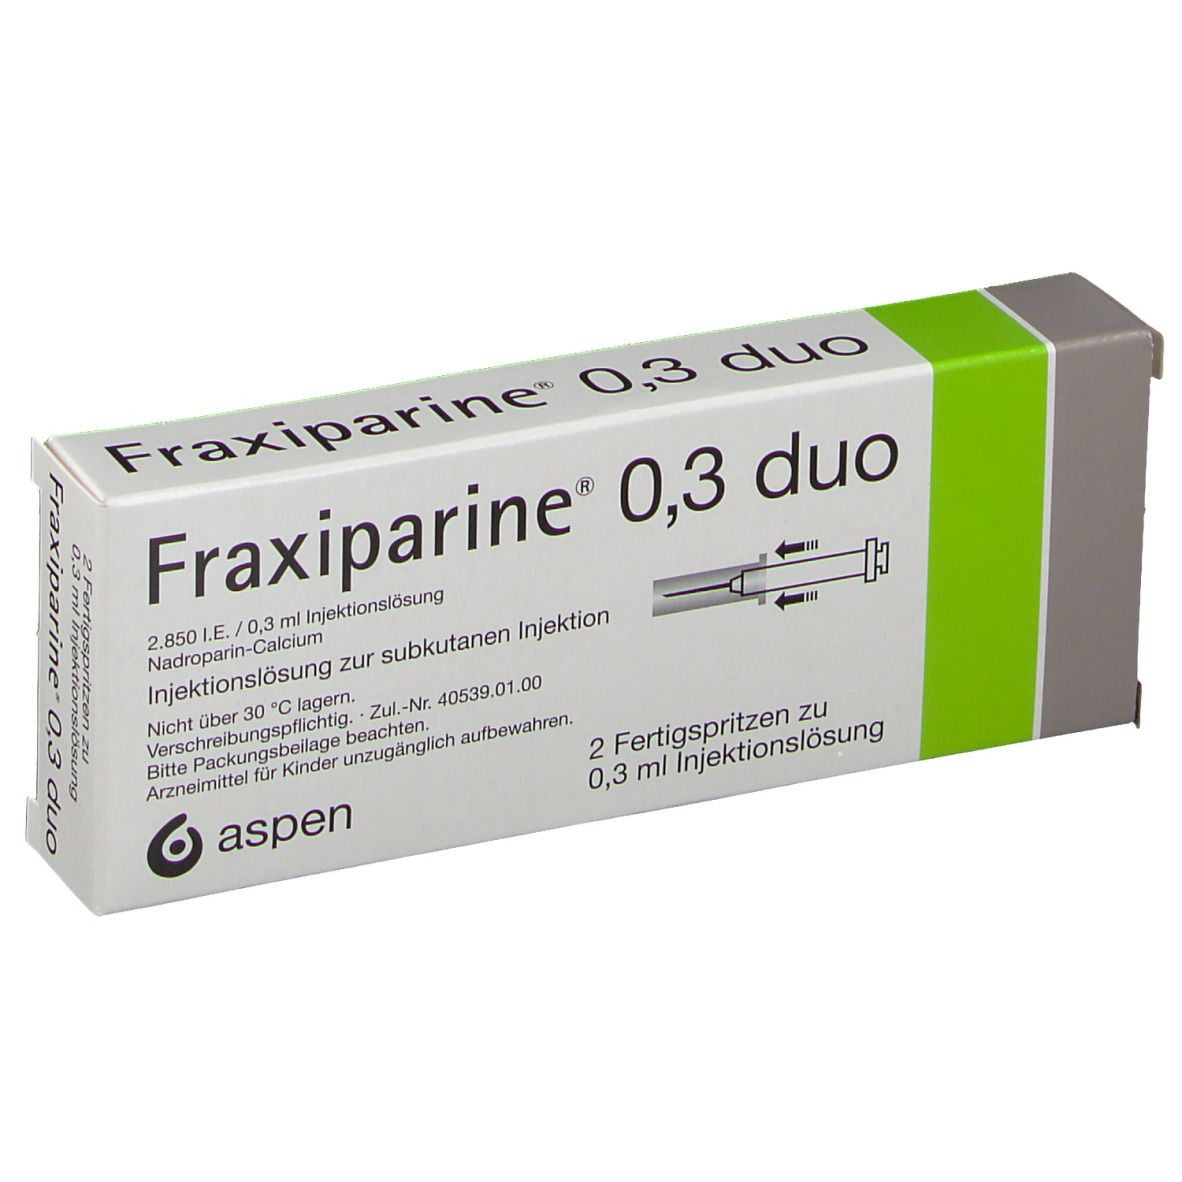 Fraxiparine® 0,3 duo